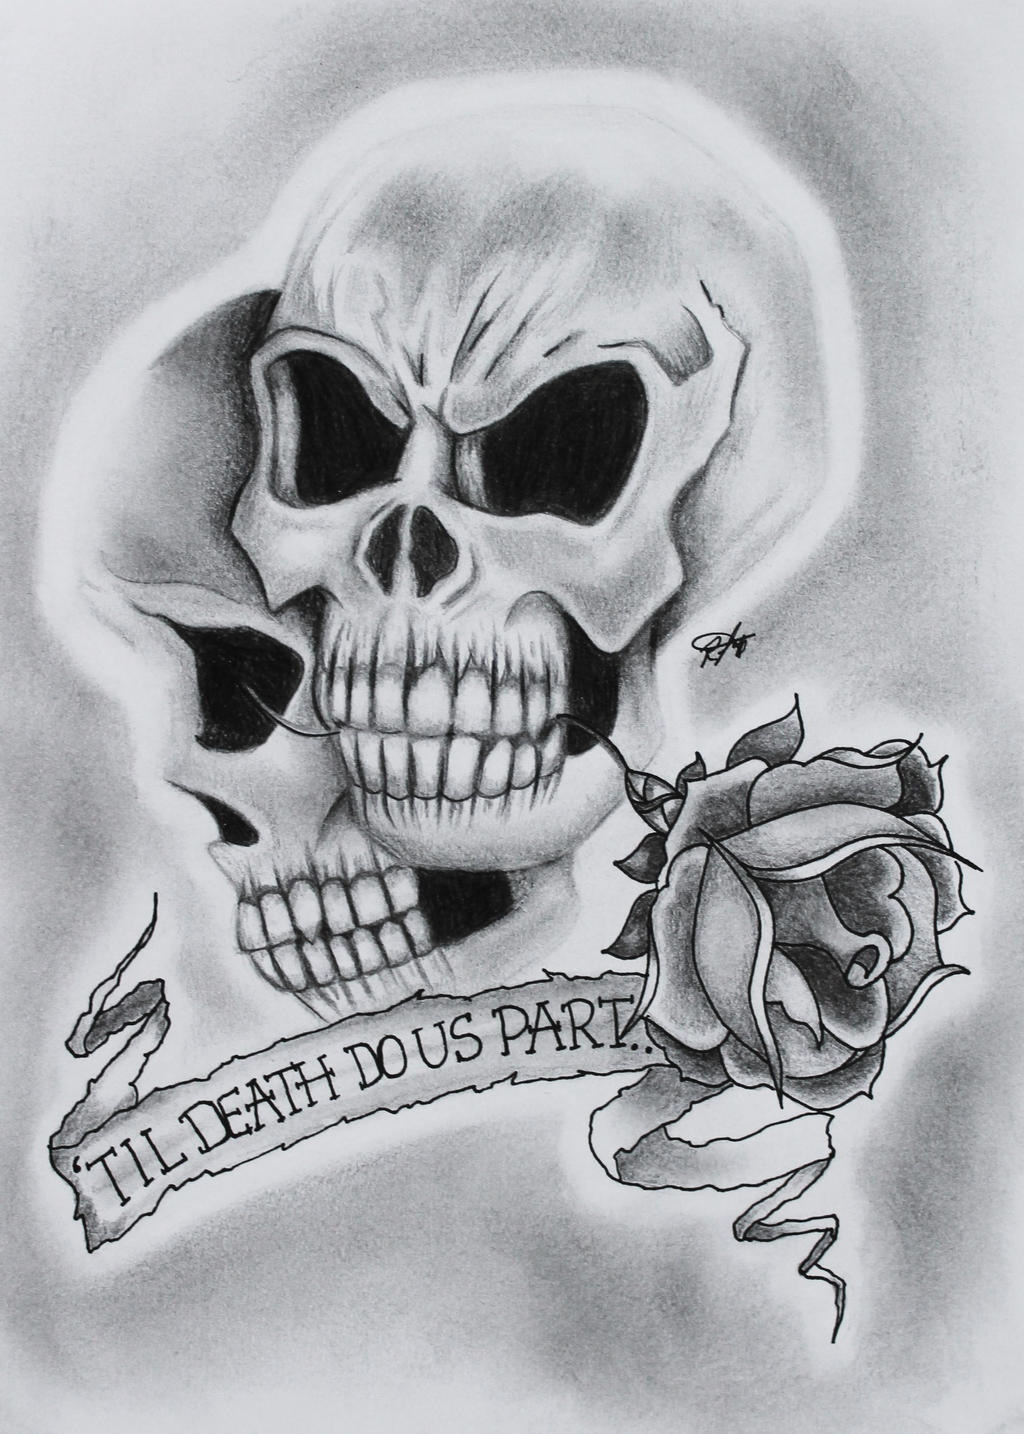 'Til Death Do Us Part... by rachaelelizabethfry on DeviantArt